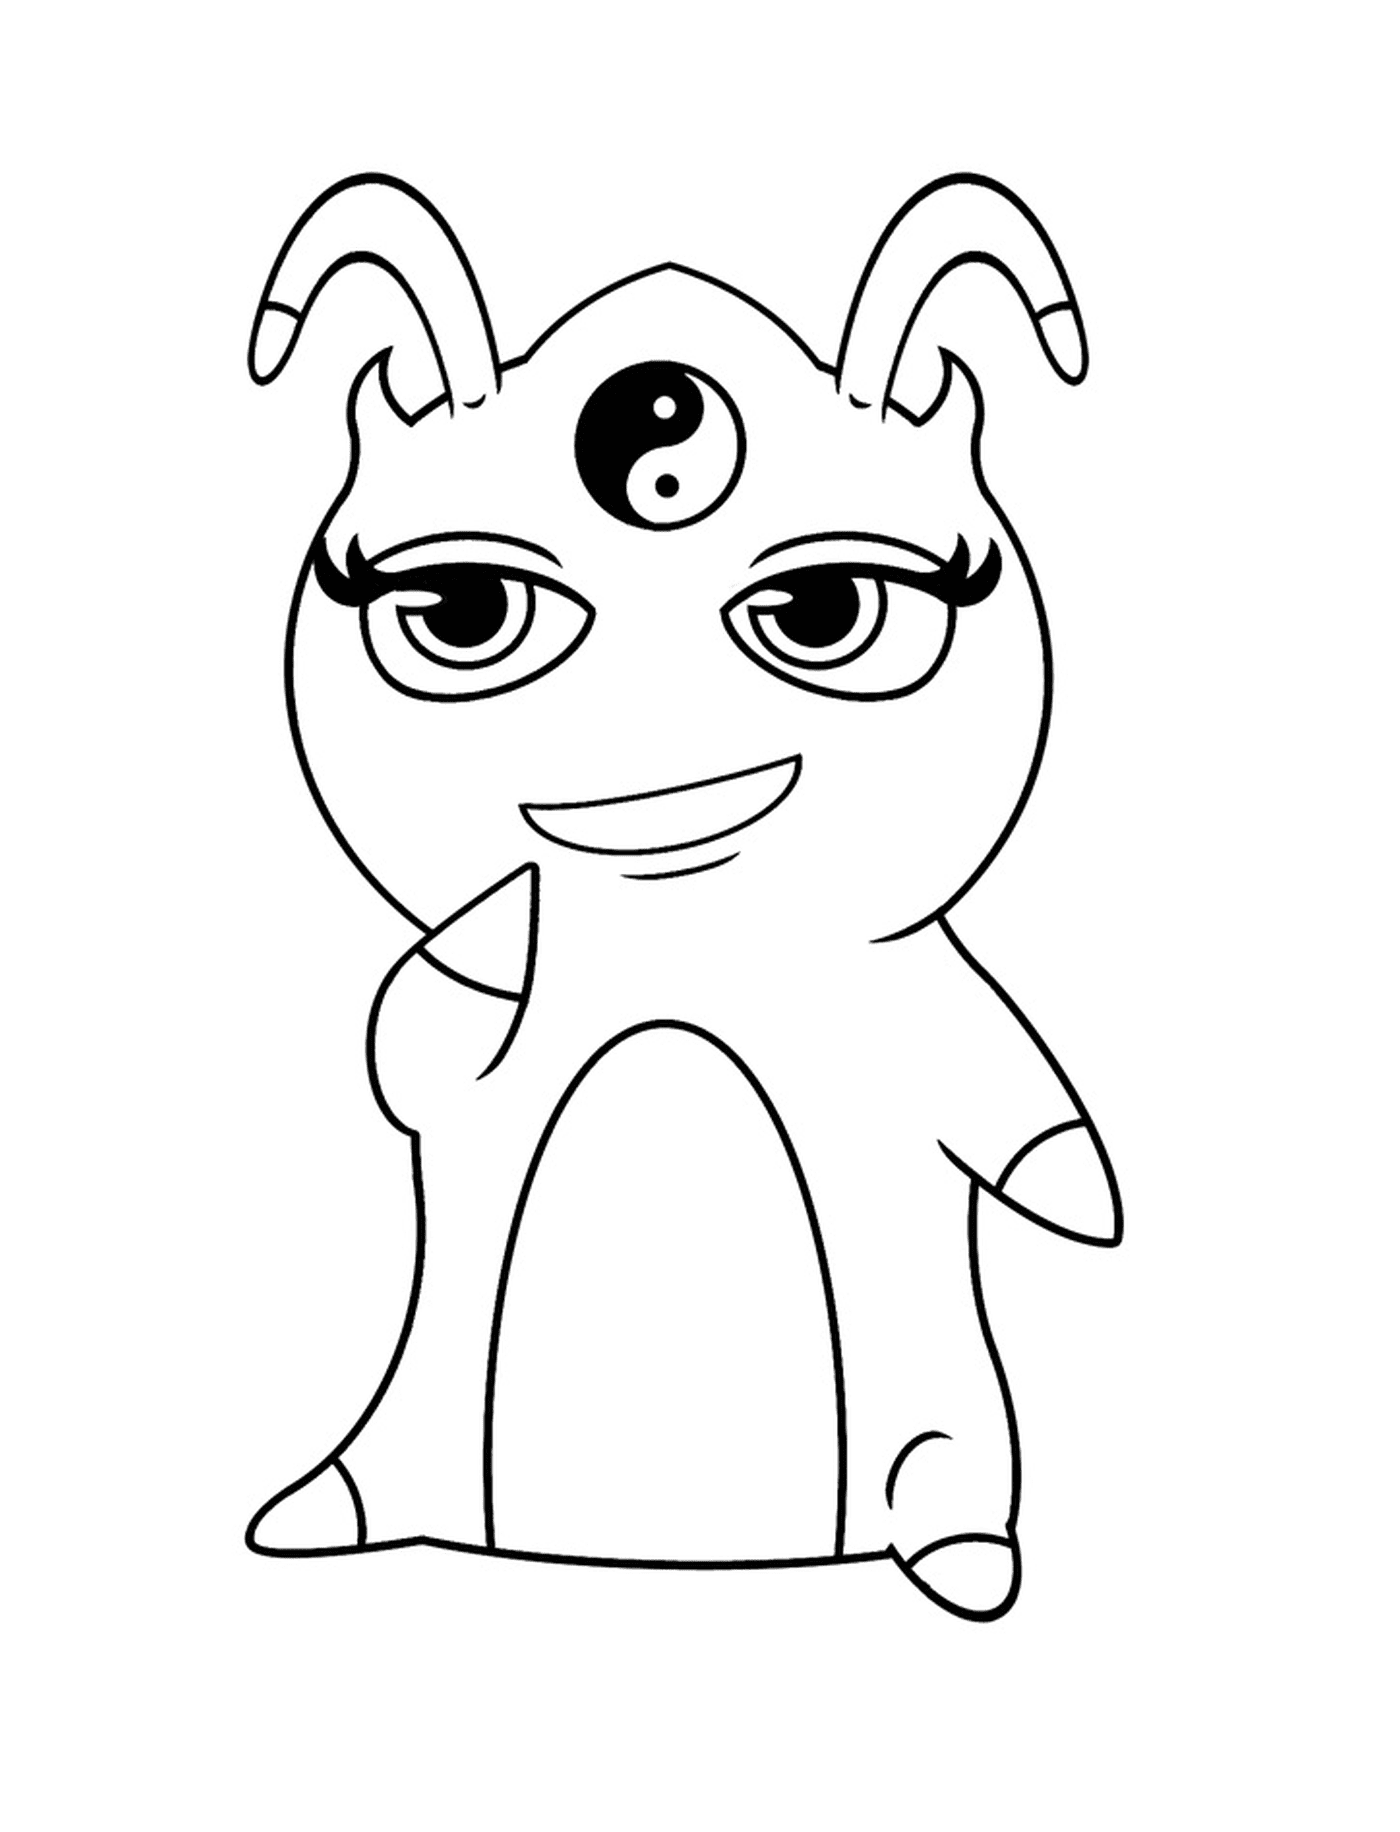  Harmony, cartoon character with a third eye 